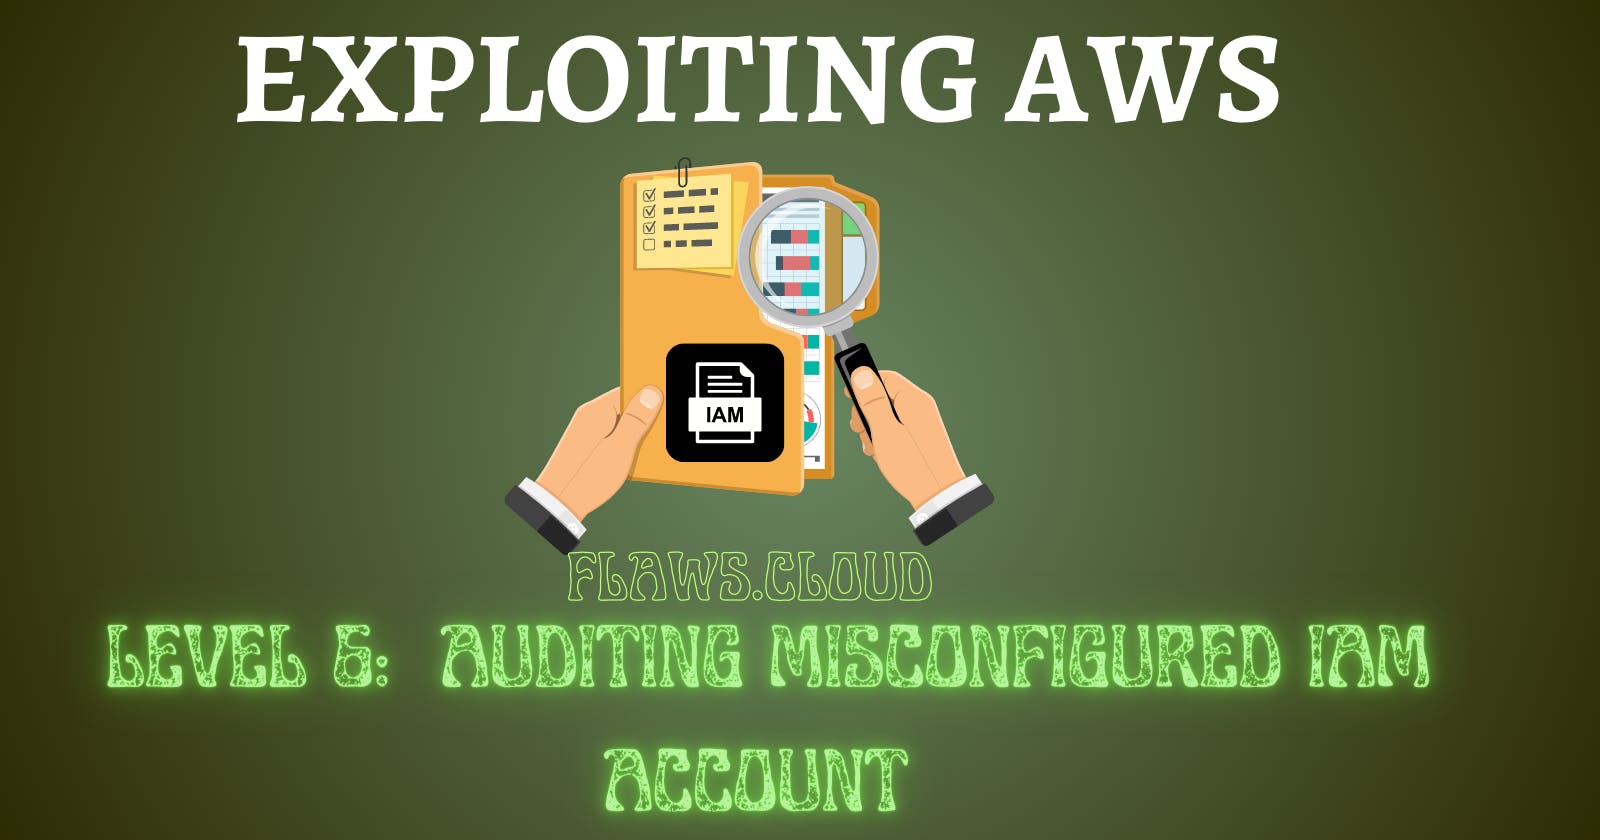 Level -6: "Auditing misconfigured IAM Account”